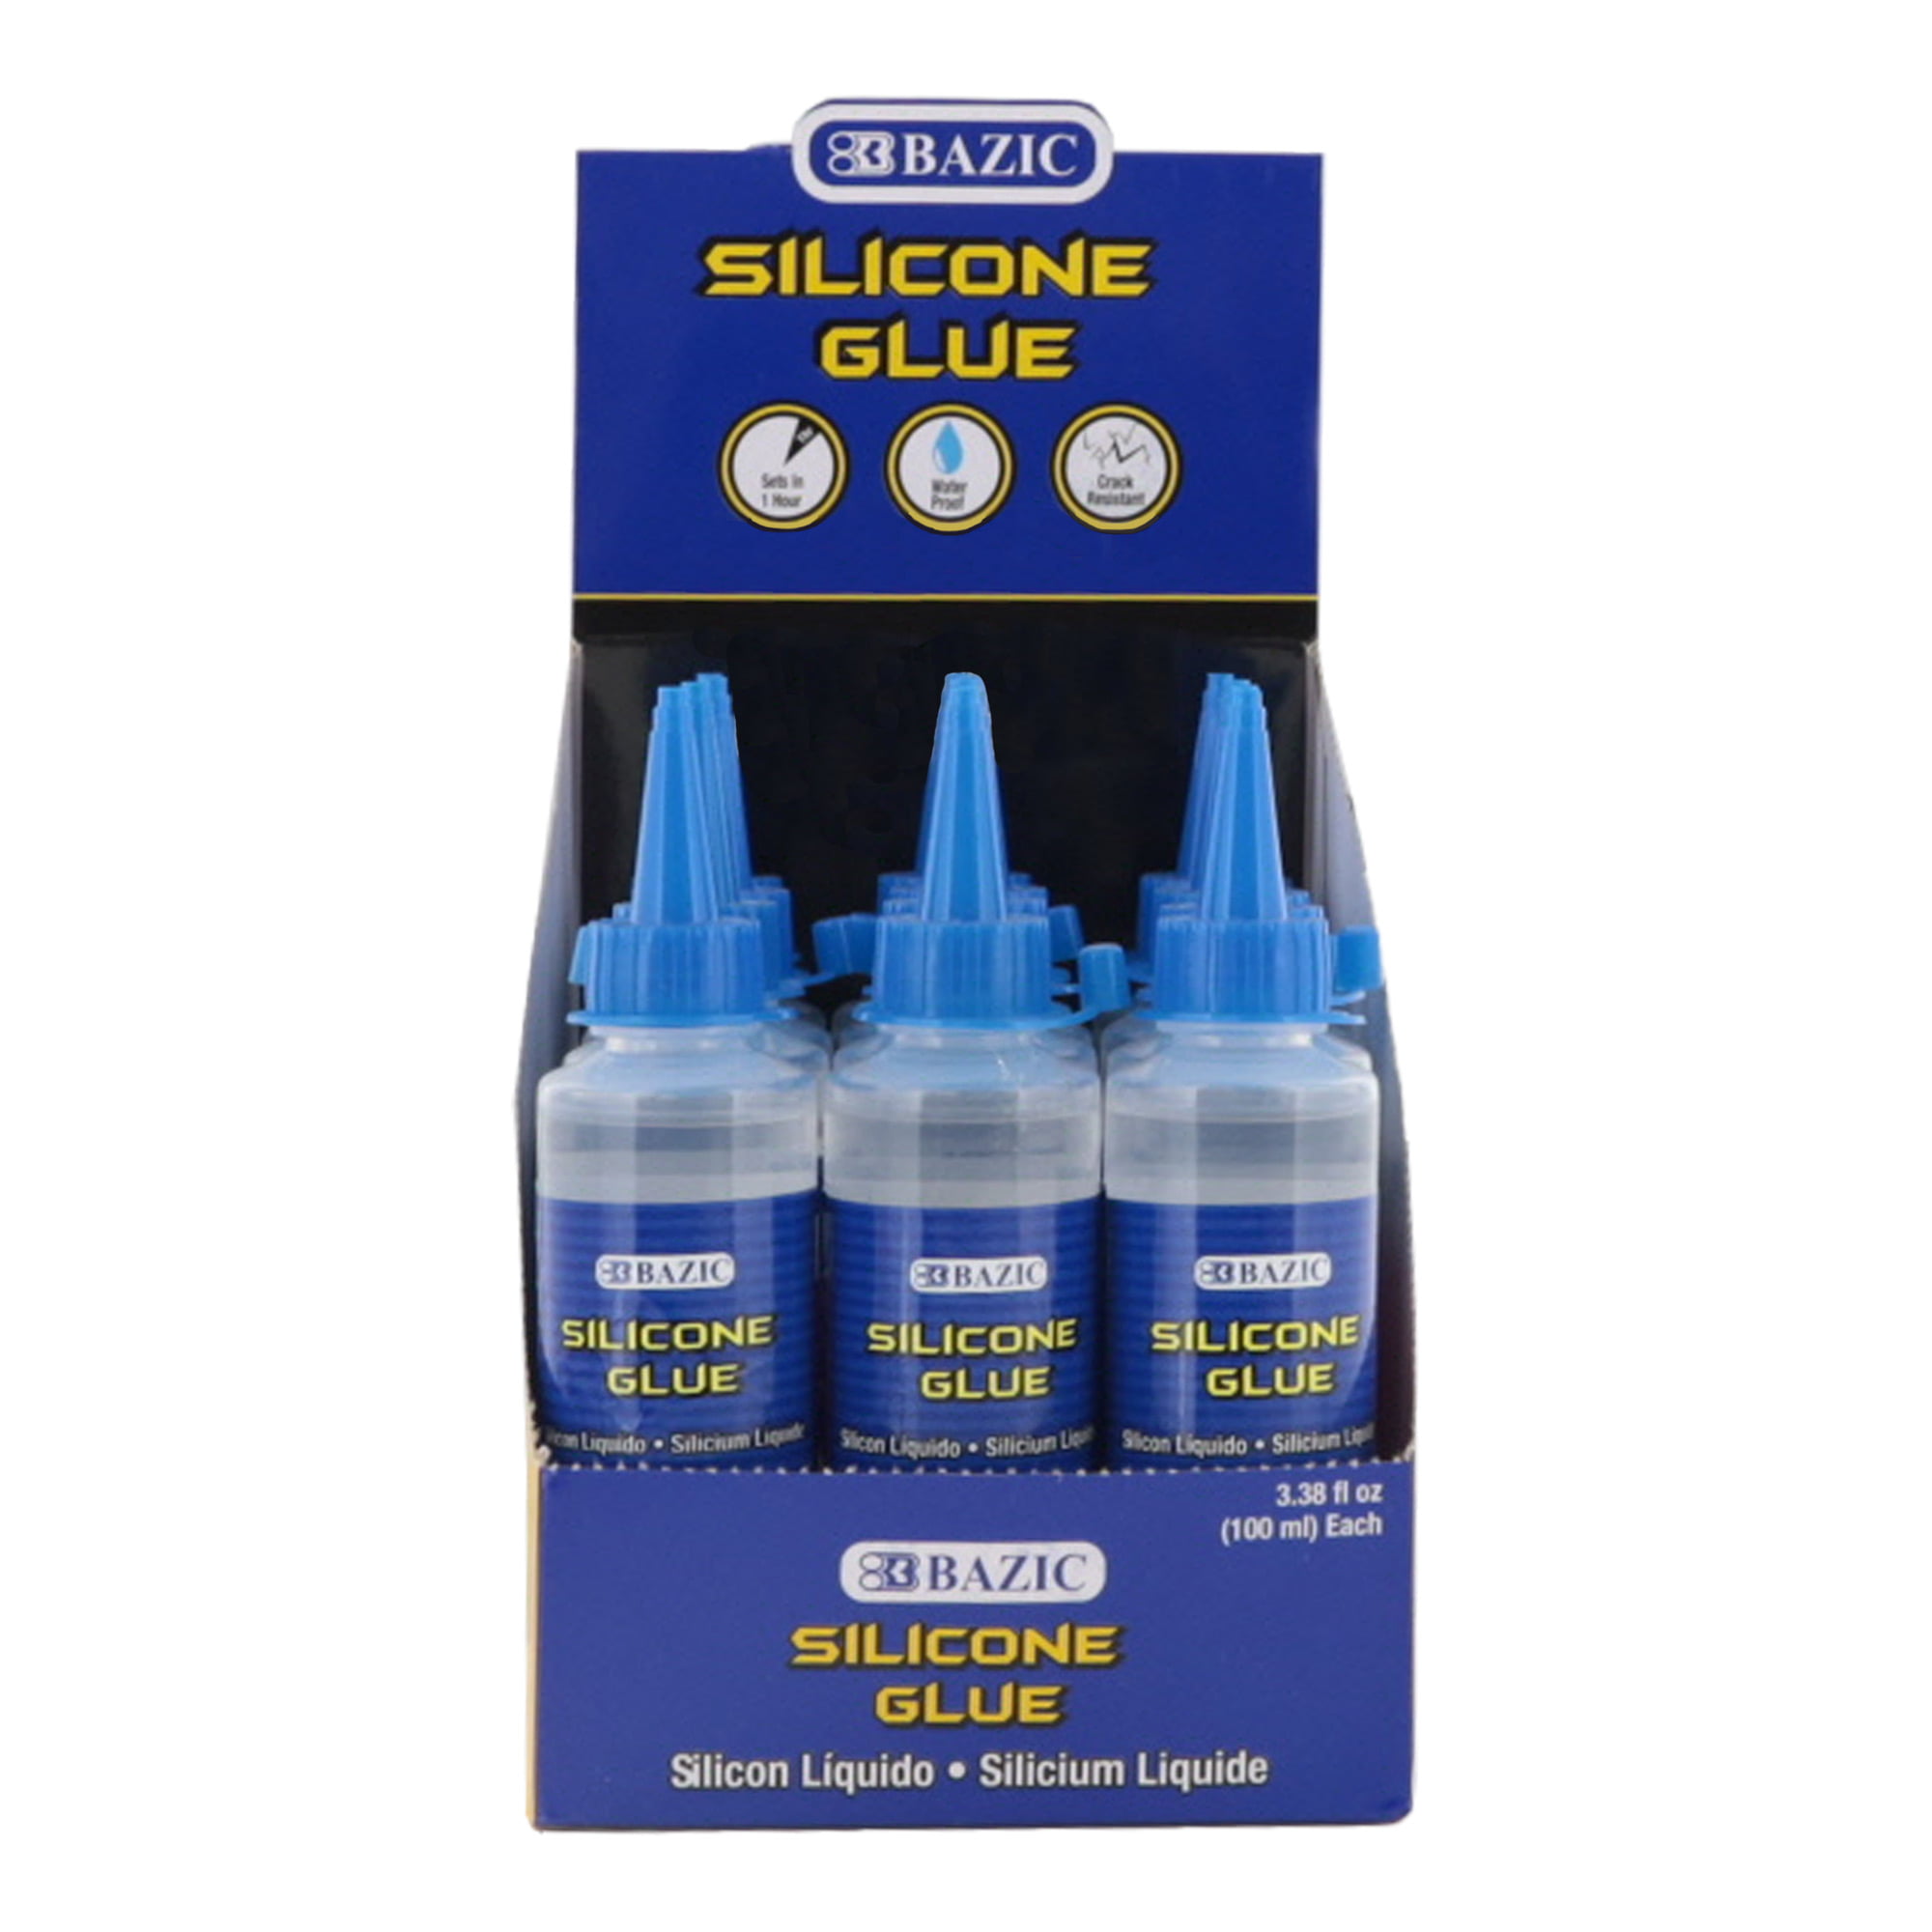 BAZIC Silicone Glue 3.38Oz (100 mL), Waterproof Crack Resistant, 12-Pack 